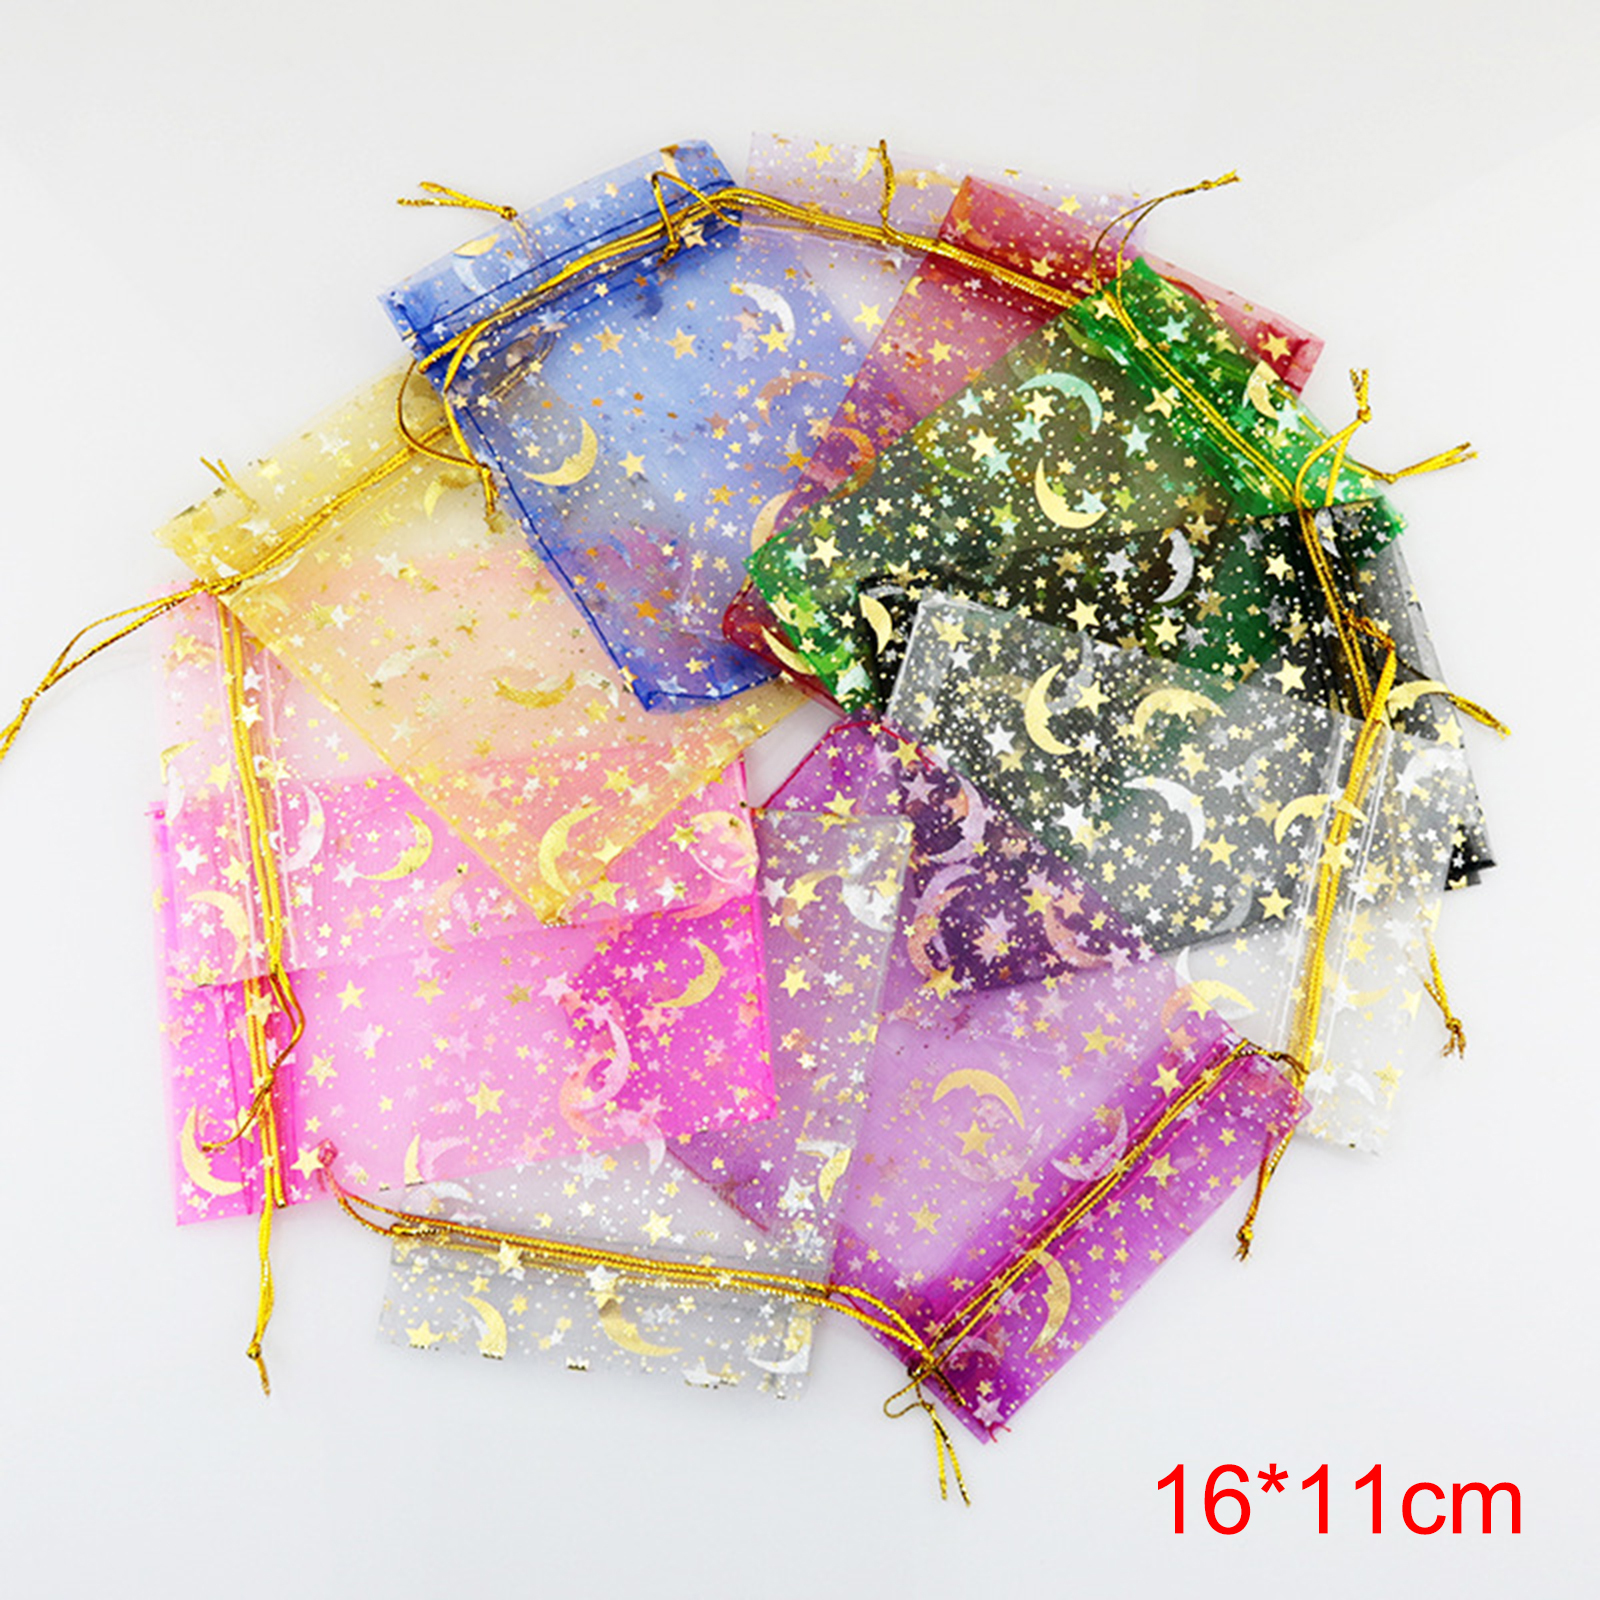 Picture of Wedding Gift Organza Galaxy Drawstring Bags Half Moon At Random Color Star 16cm x11cm(6 2/8" x4 3/8"), 20 PCs